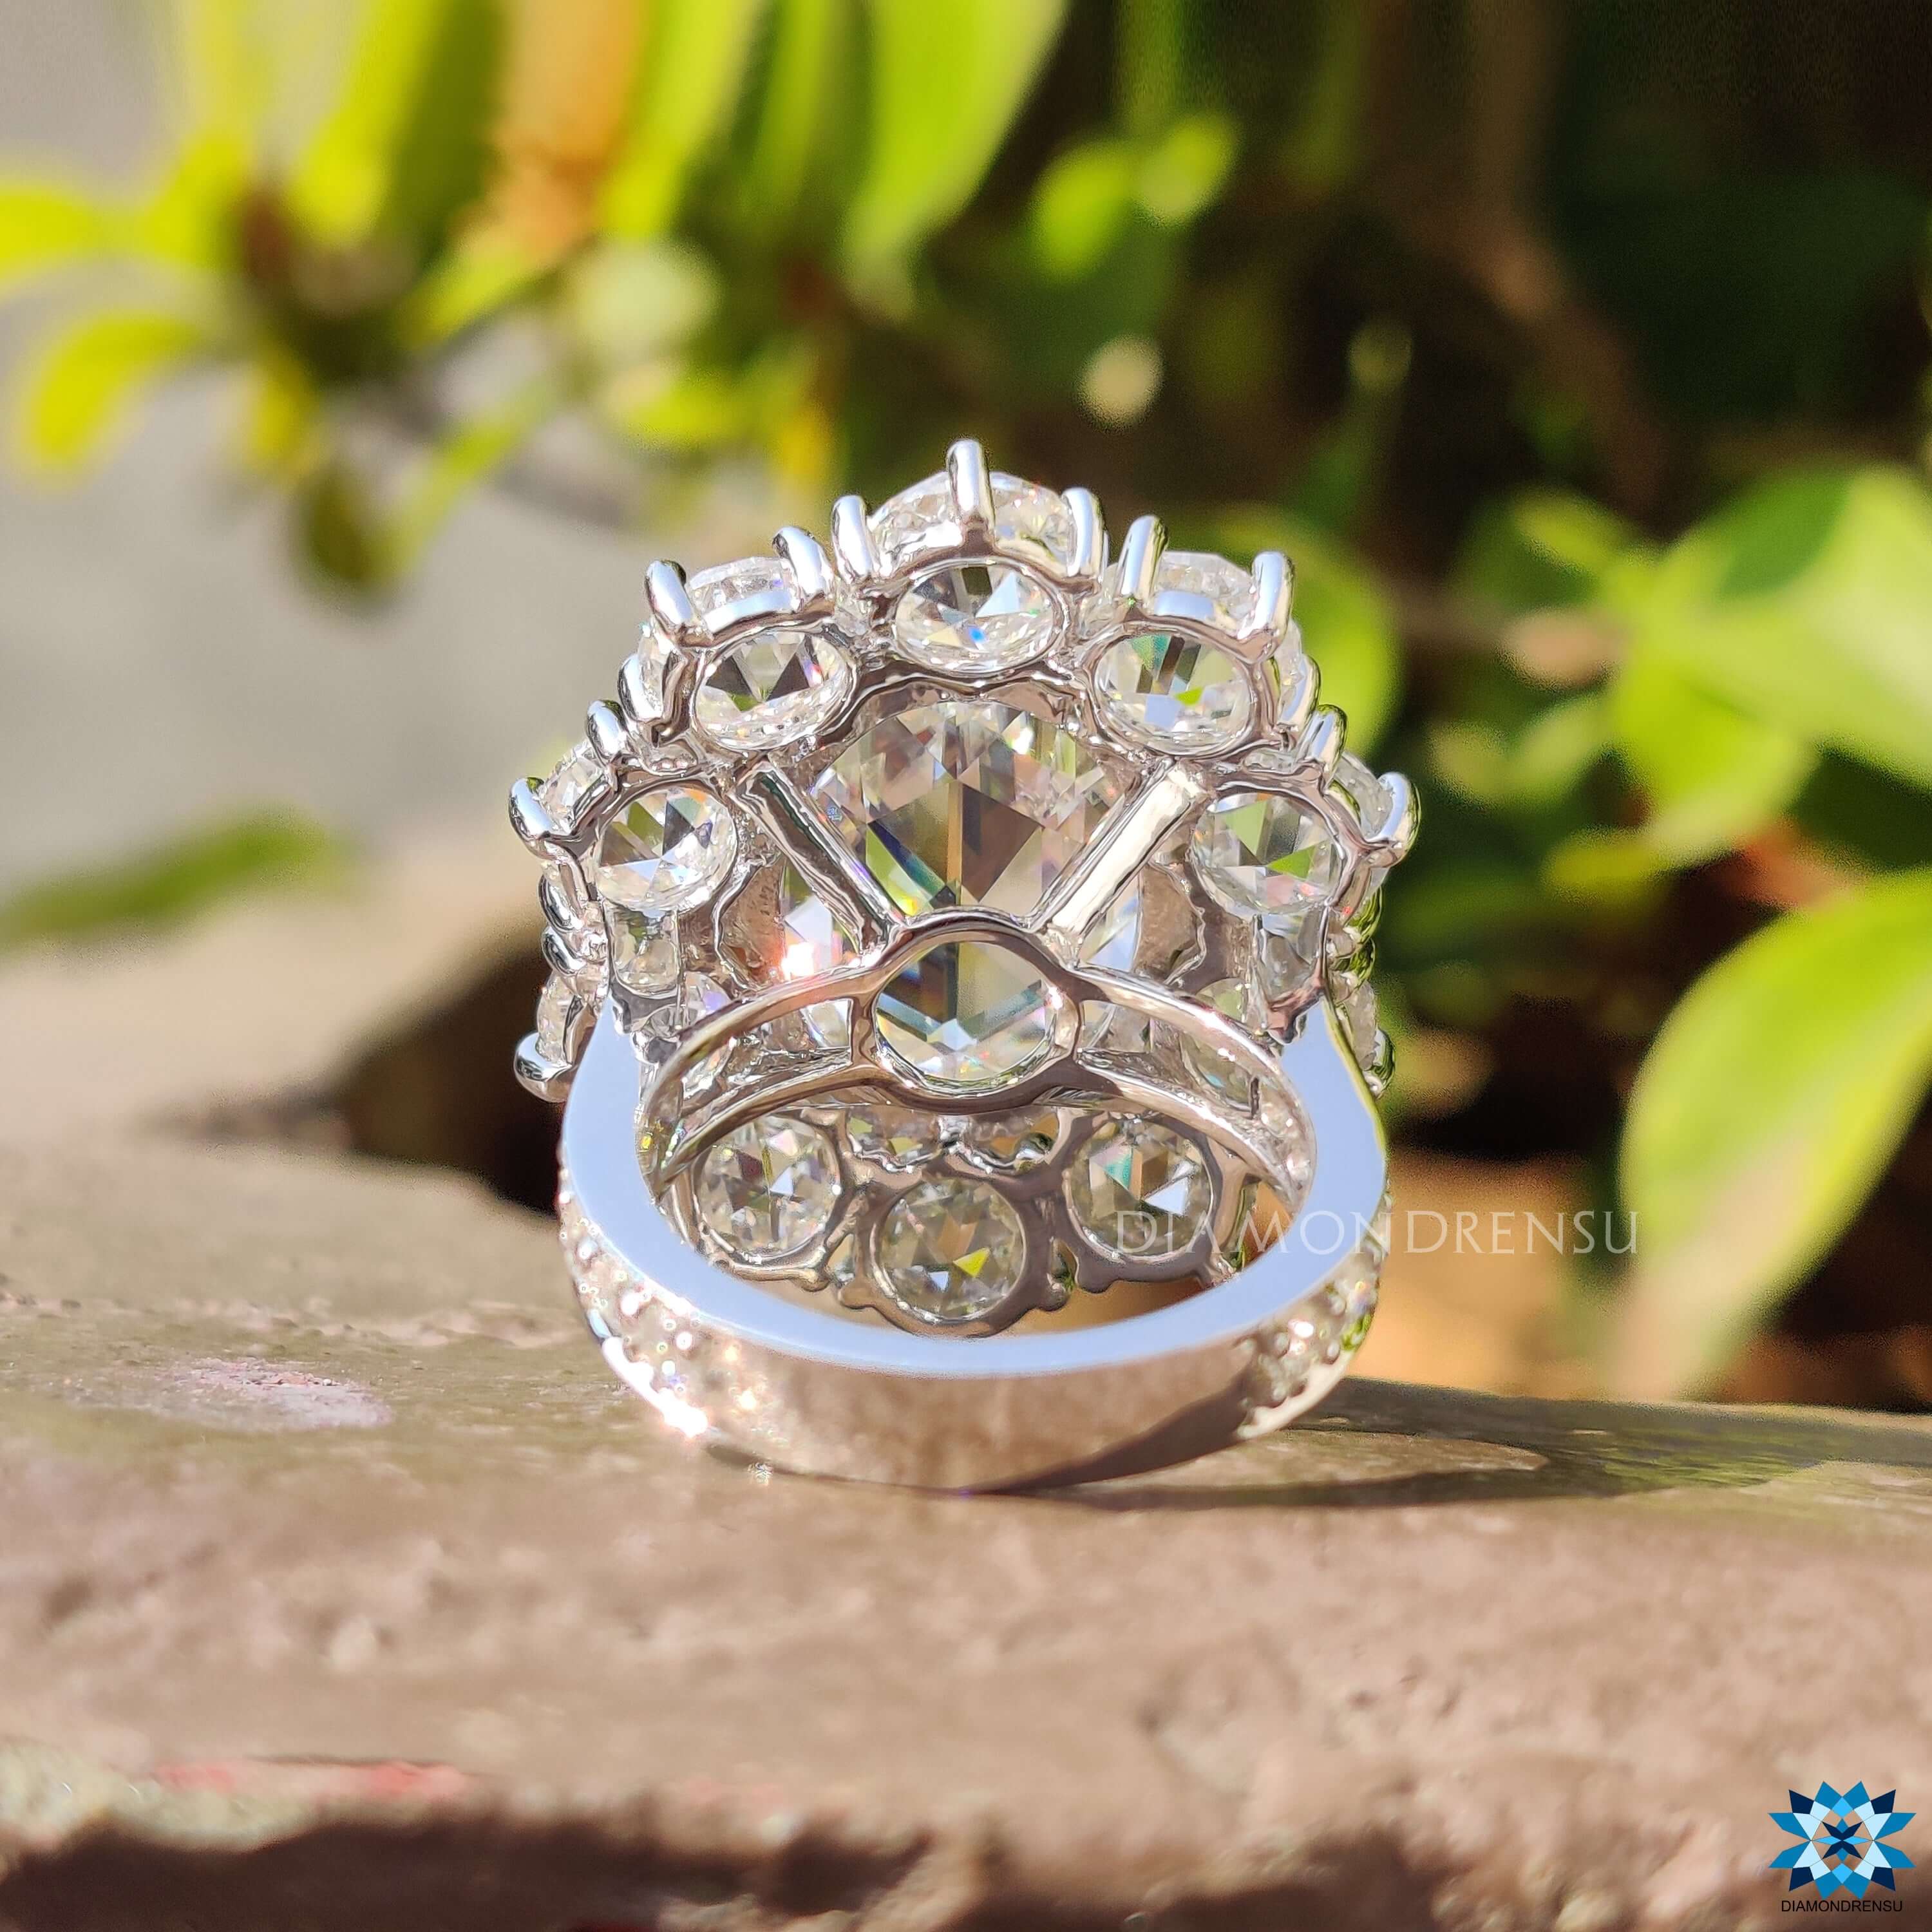 moissanite halo engagement rings - diamondrensu